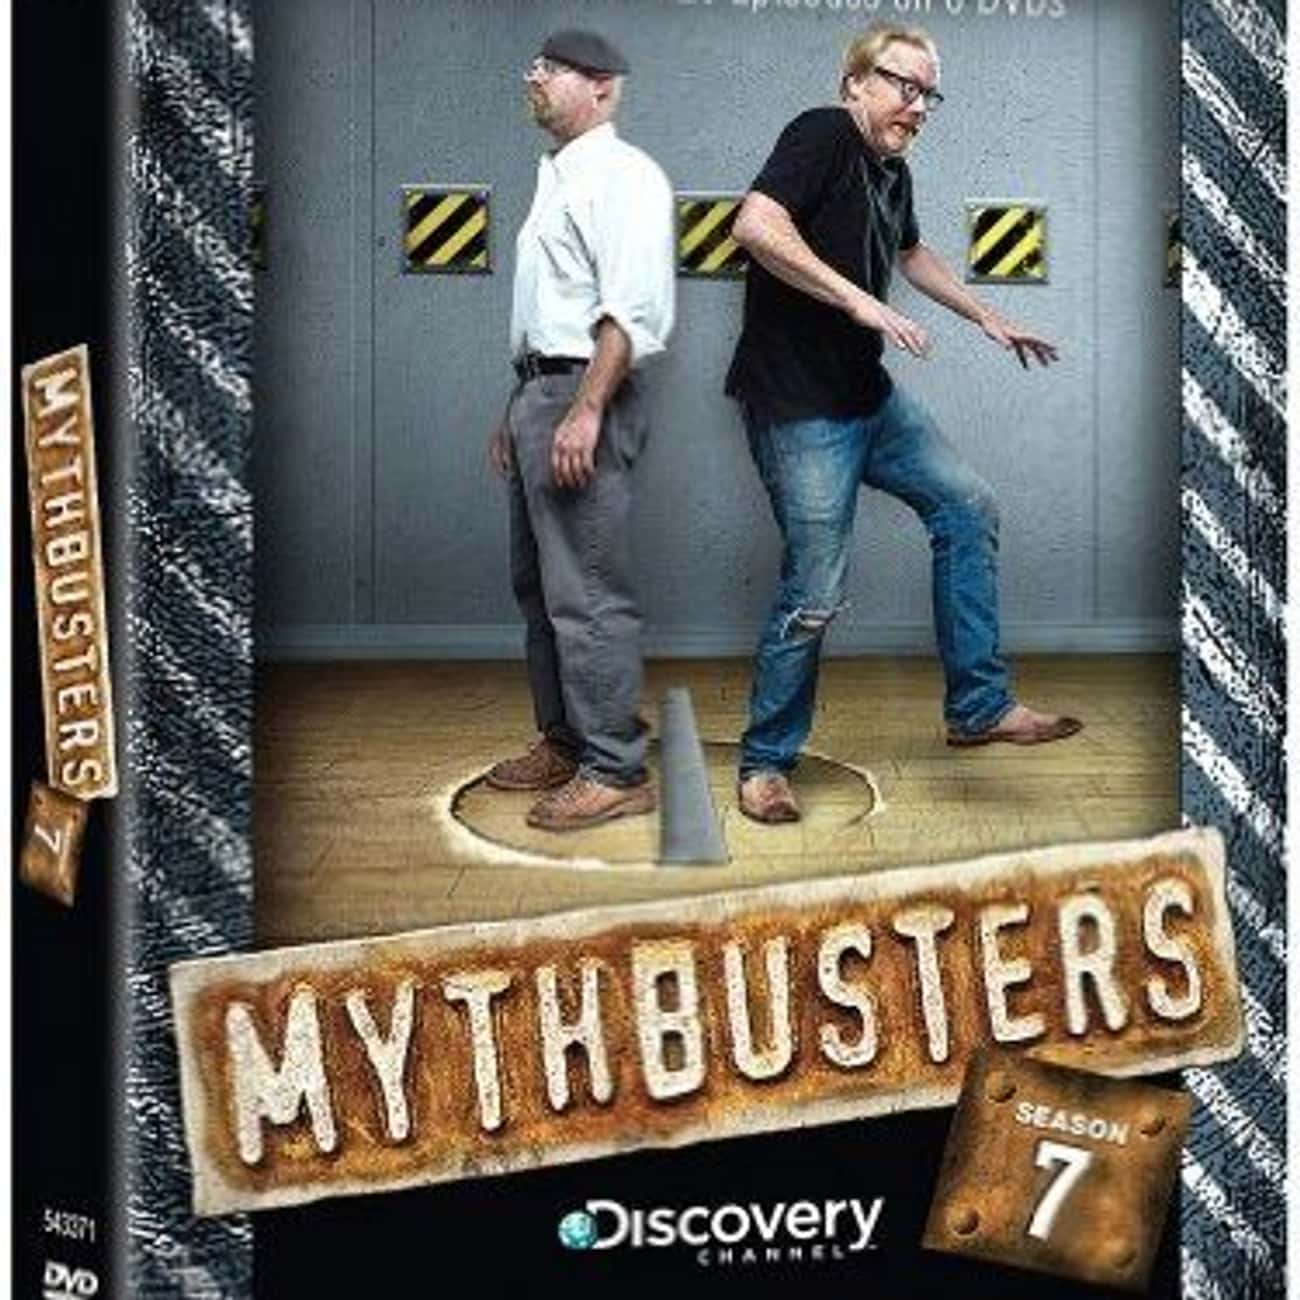 MythBusters Season 7